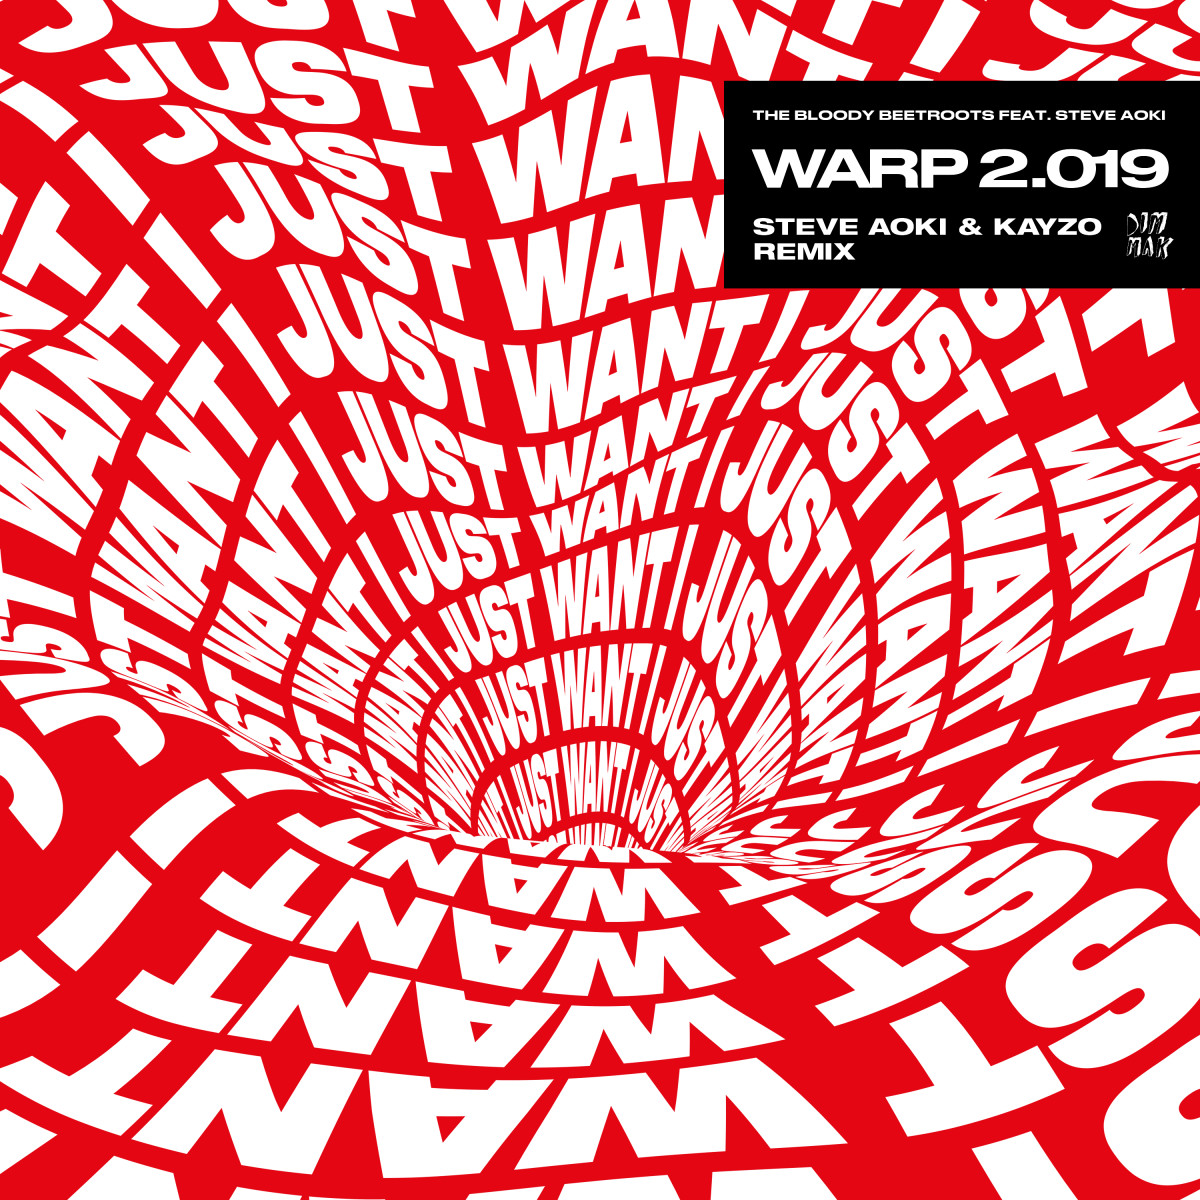 The Bloody Beetroots - WARP (feat. Steve Aoki) [Steve Aoki & Kazo Warp 2.019 Remix) -- OUT NOW on Dim Mak Records